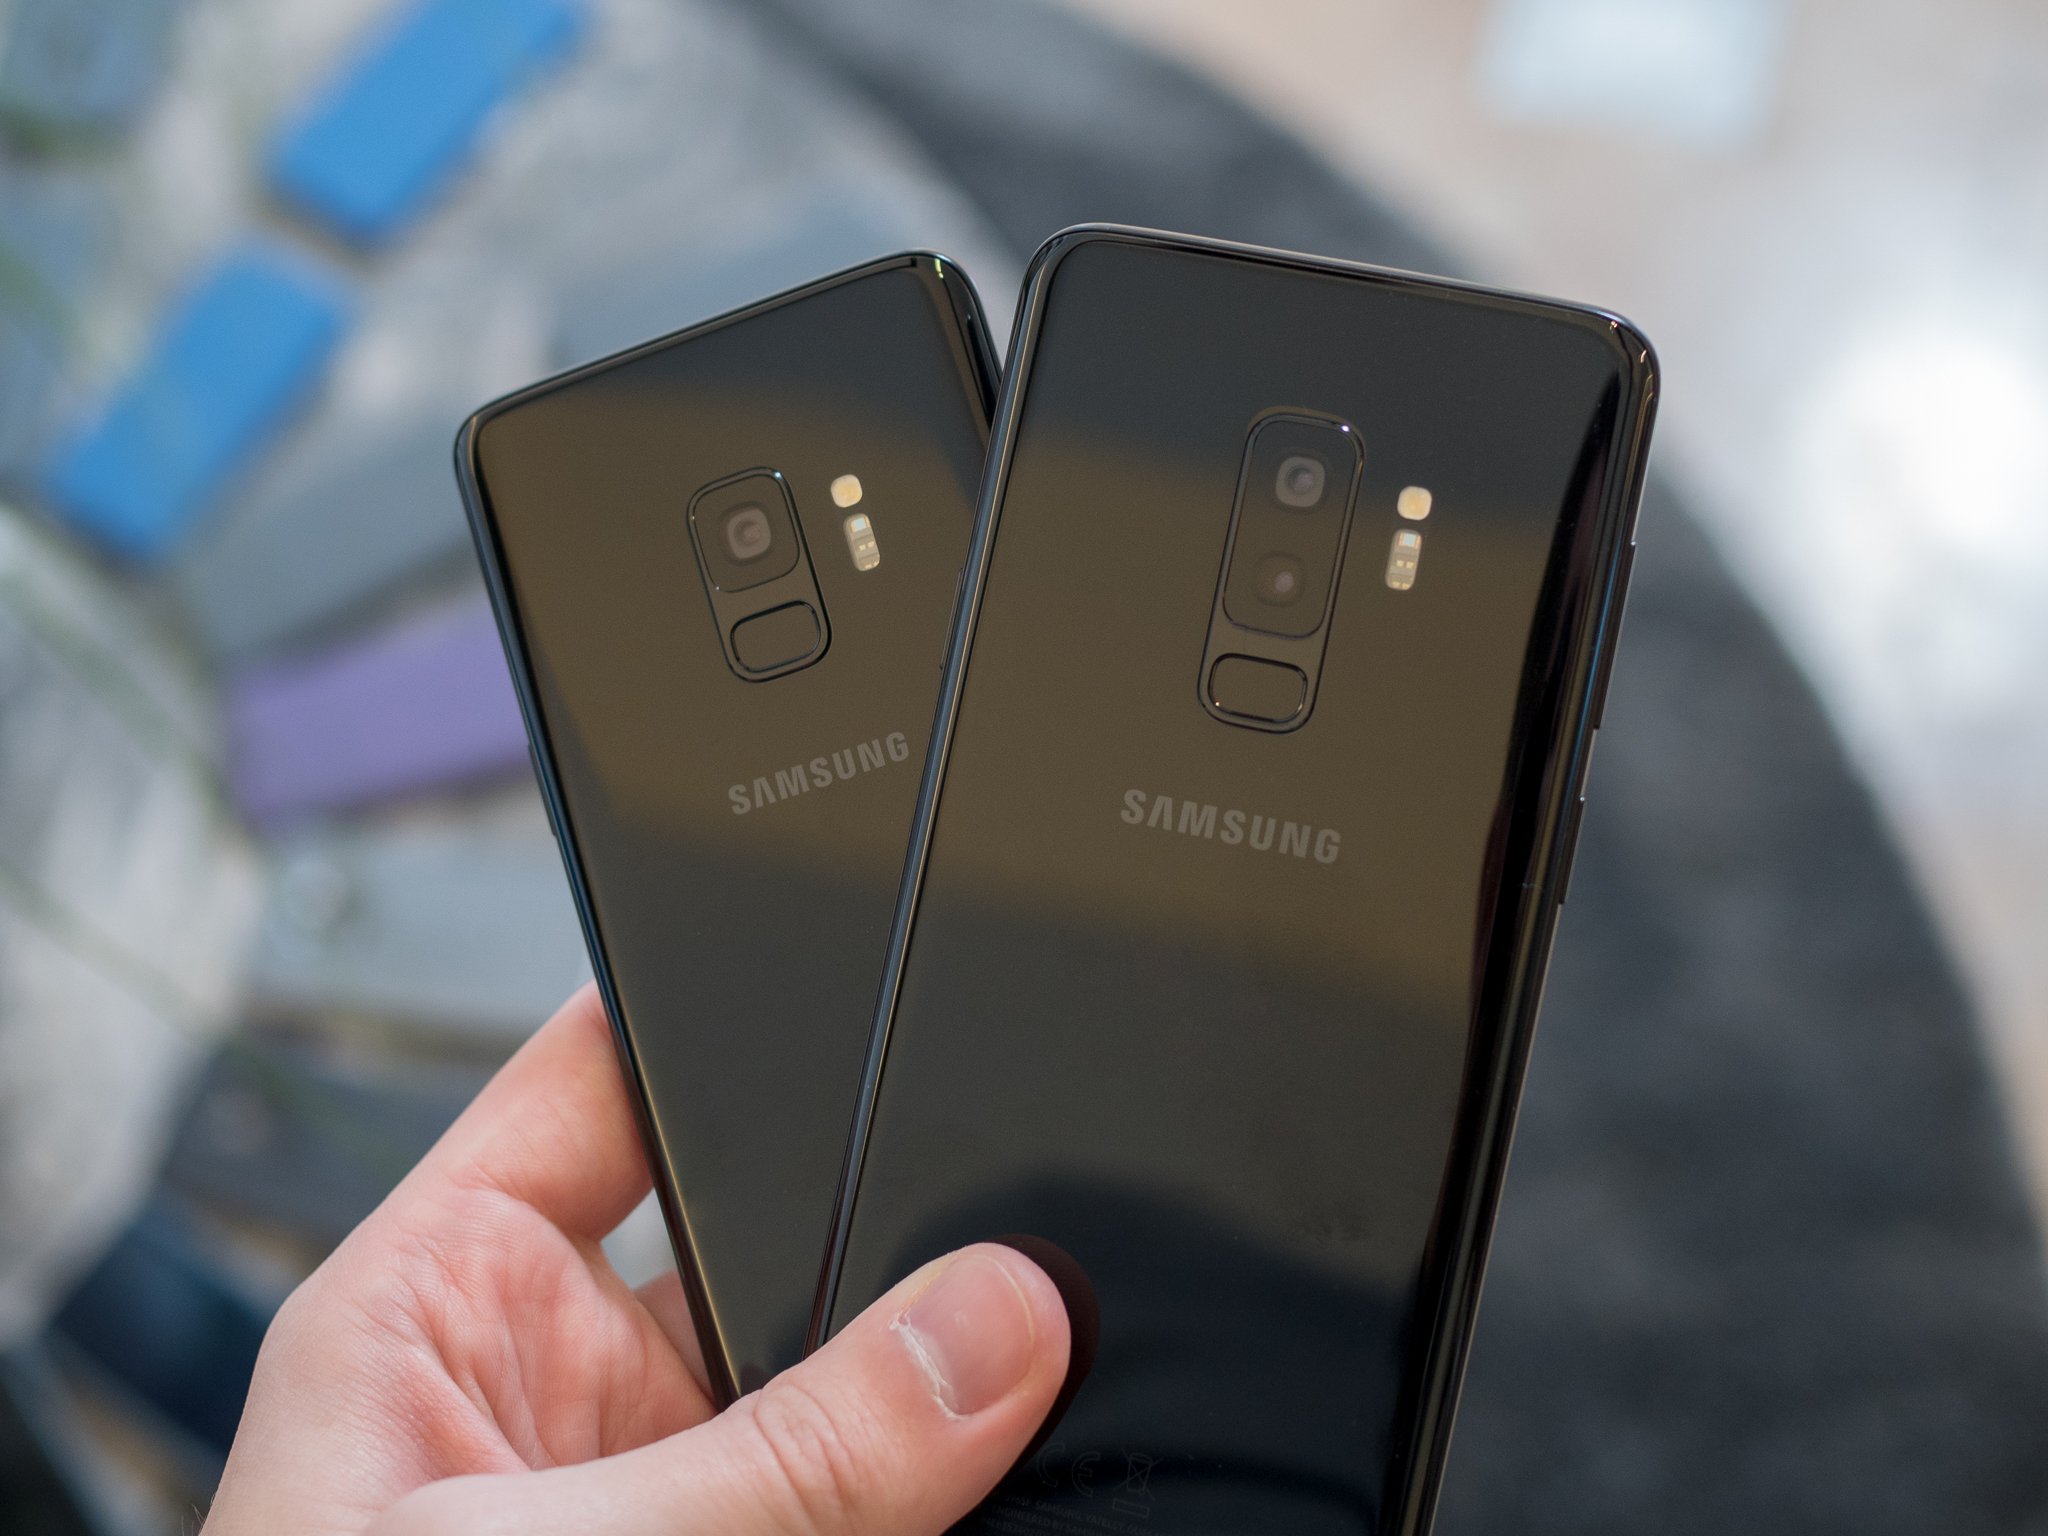 Samung Galaxy S9 and S9+